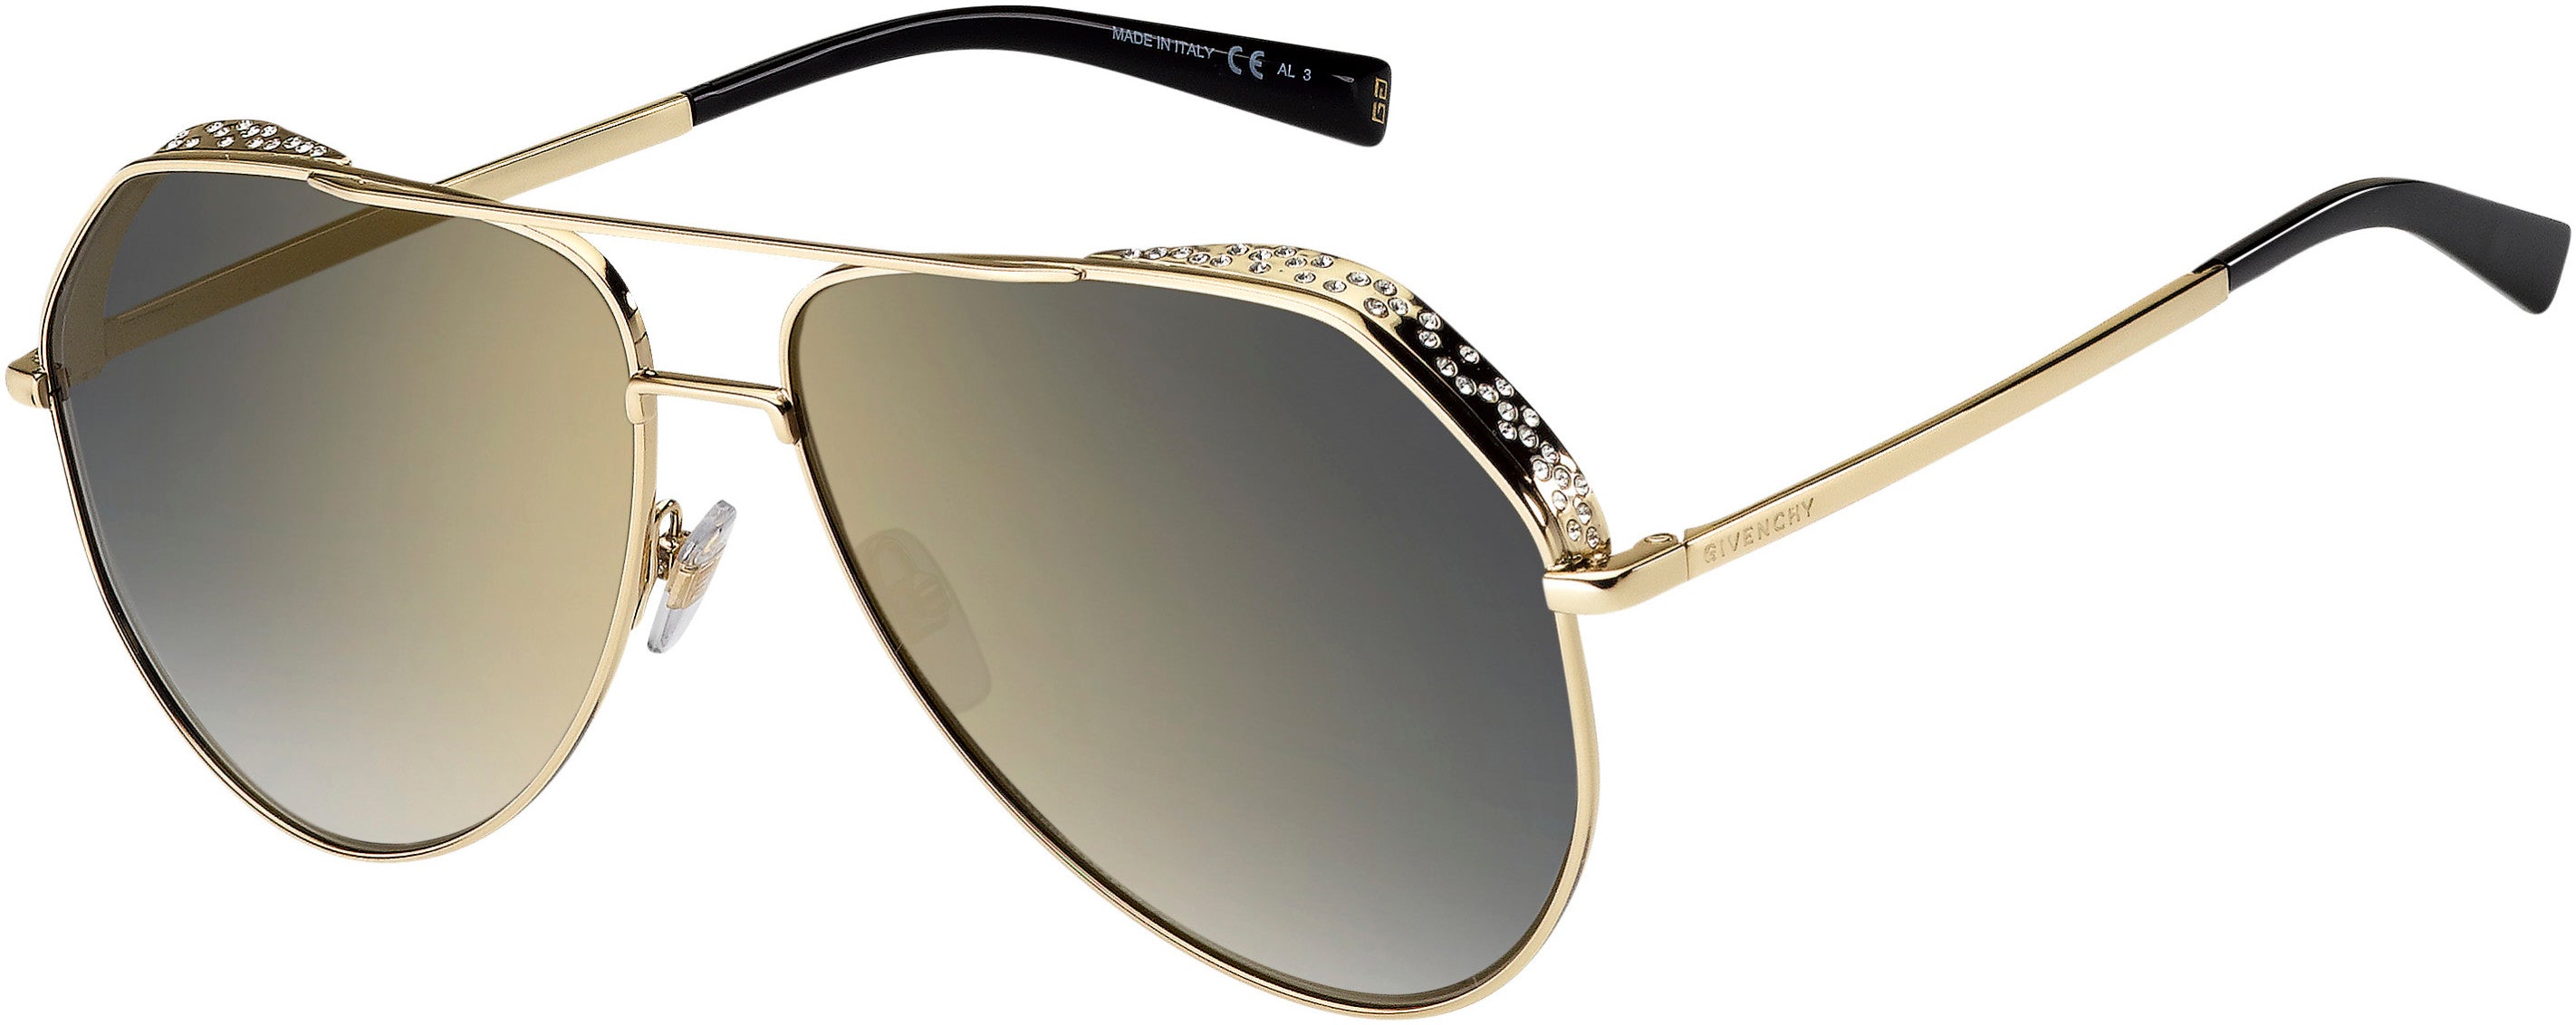  Givenchy 7185/G/S Aviator Sunglasses 0J5G-0J5G  Gold (FQ Gray Sf Gold Sp)